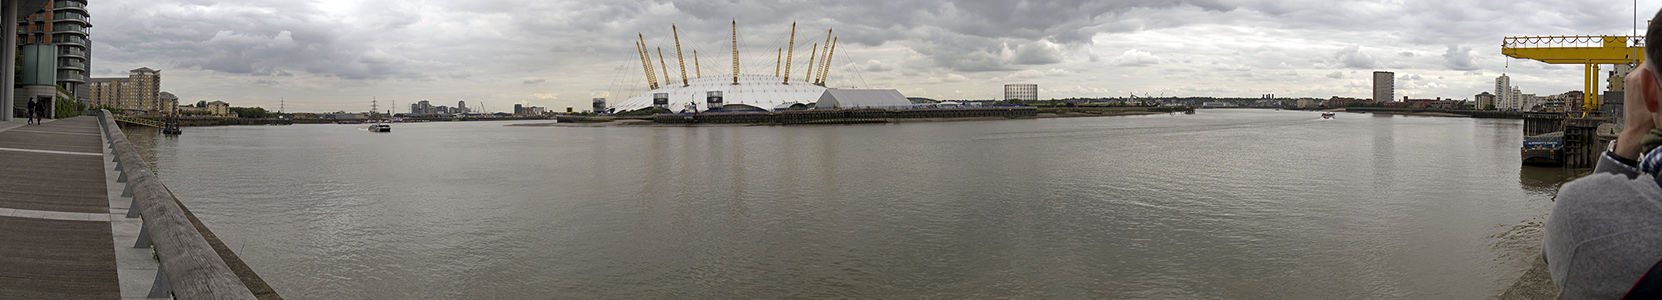 London Blackwall, Themse, Greenwich Peninsula mit The O2 (Millennium Dome)